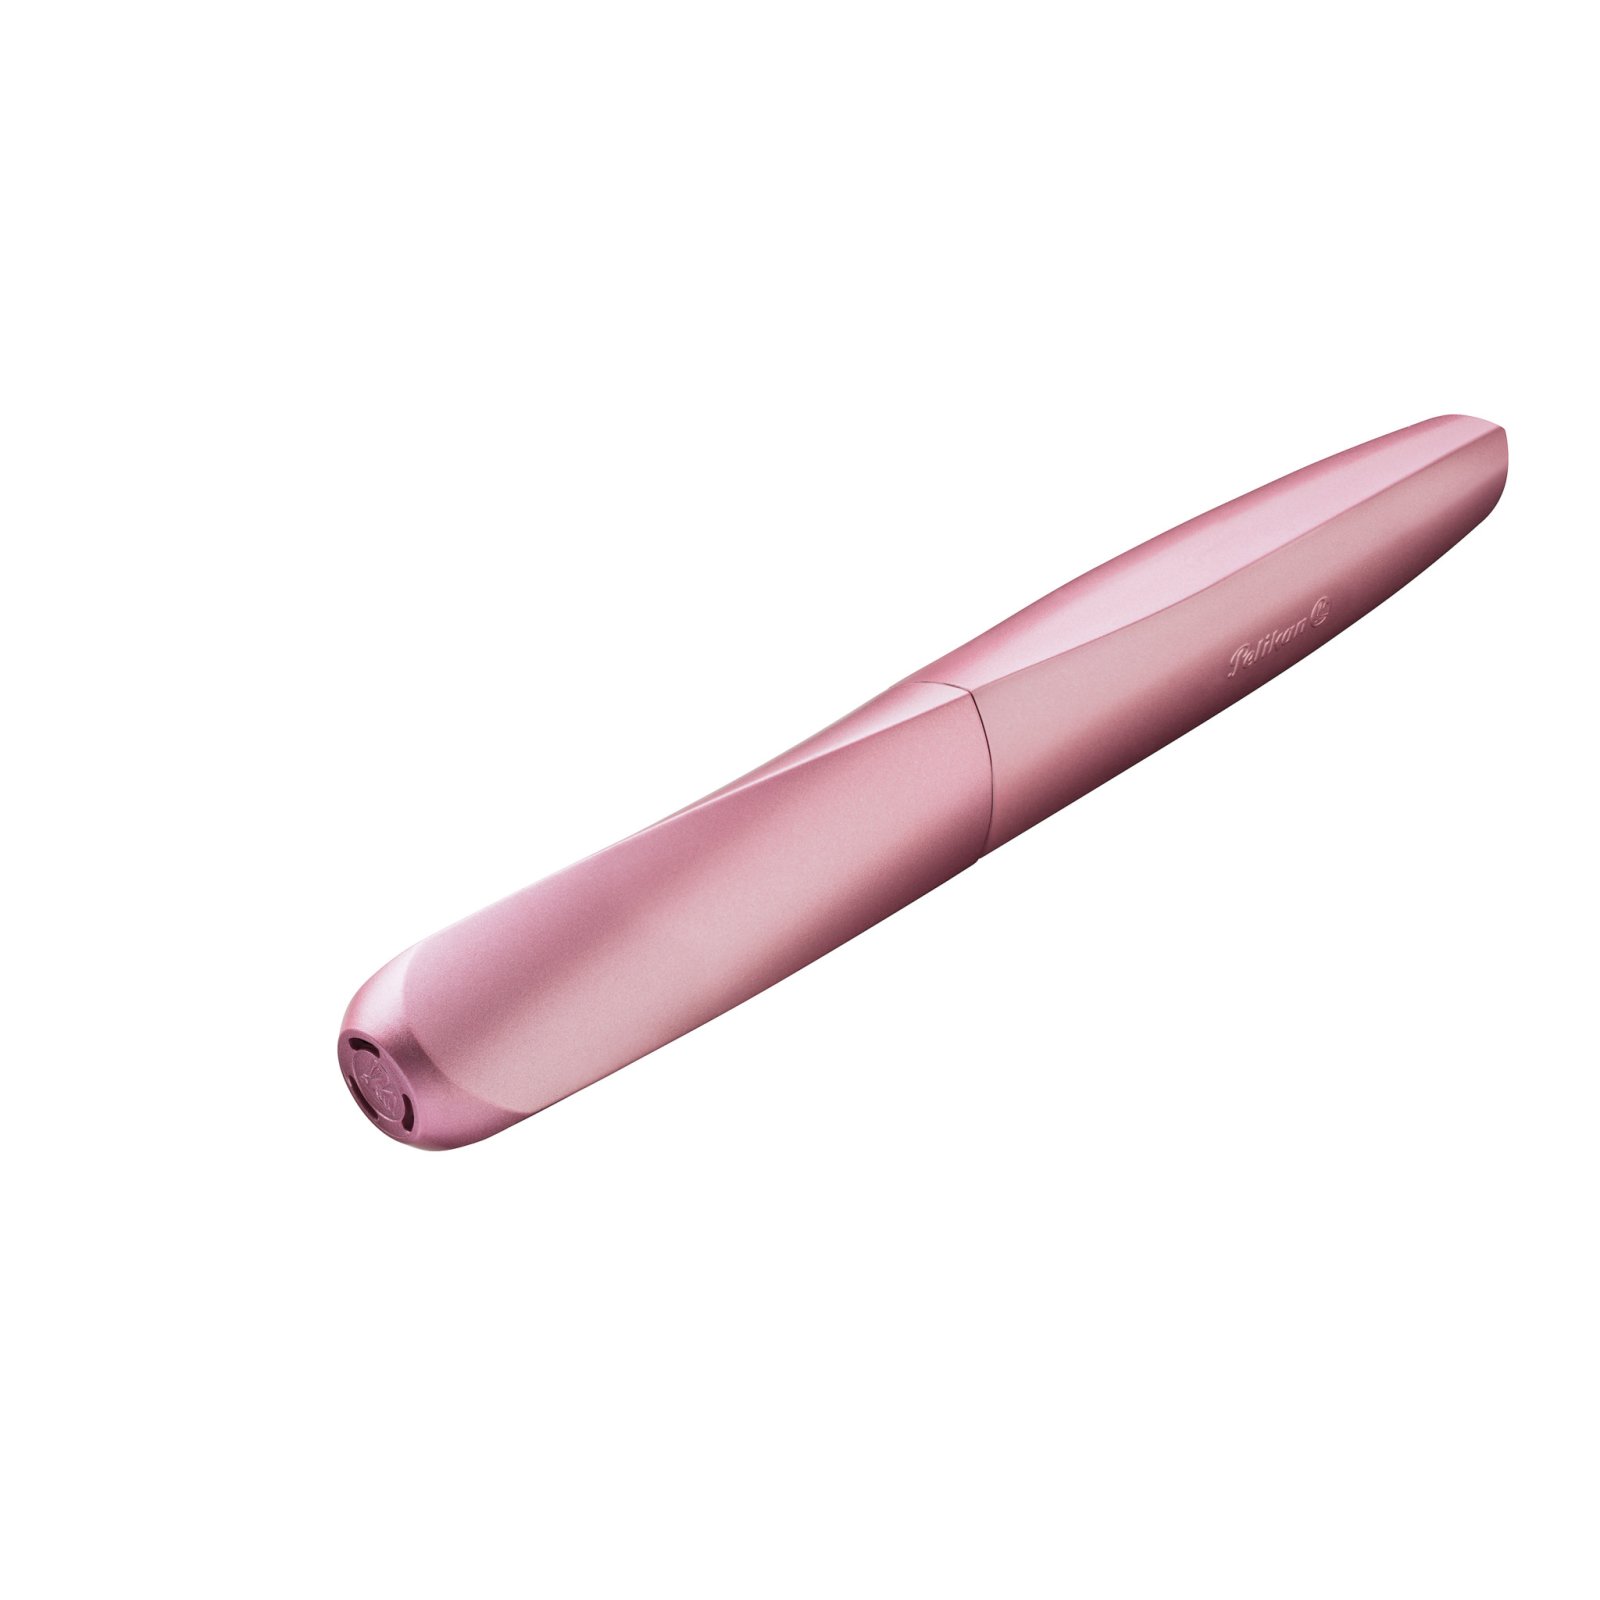 Pelikan Twist Tintenroller Rose, 806299 10,50 L+R € sch, - Girly rosa-metallic